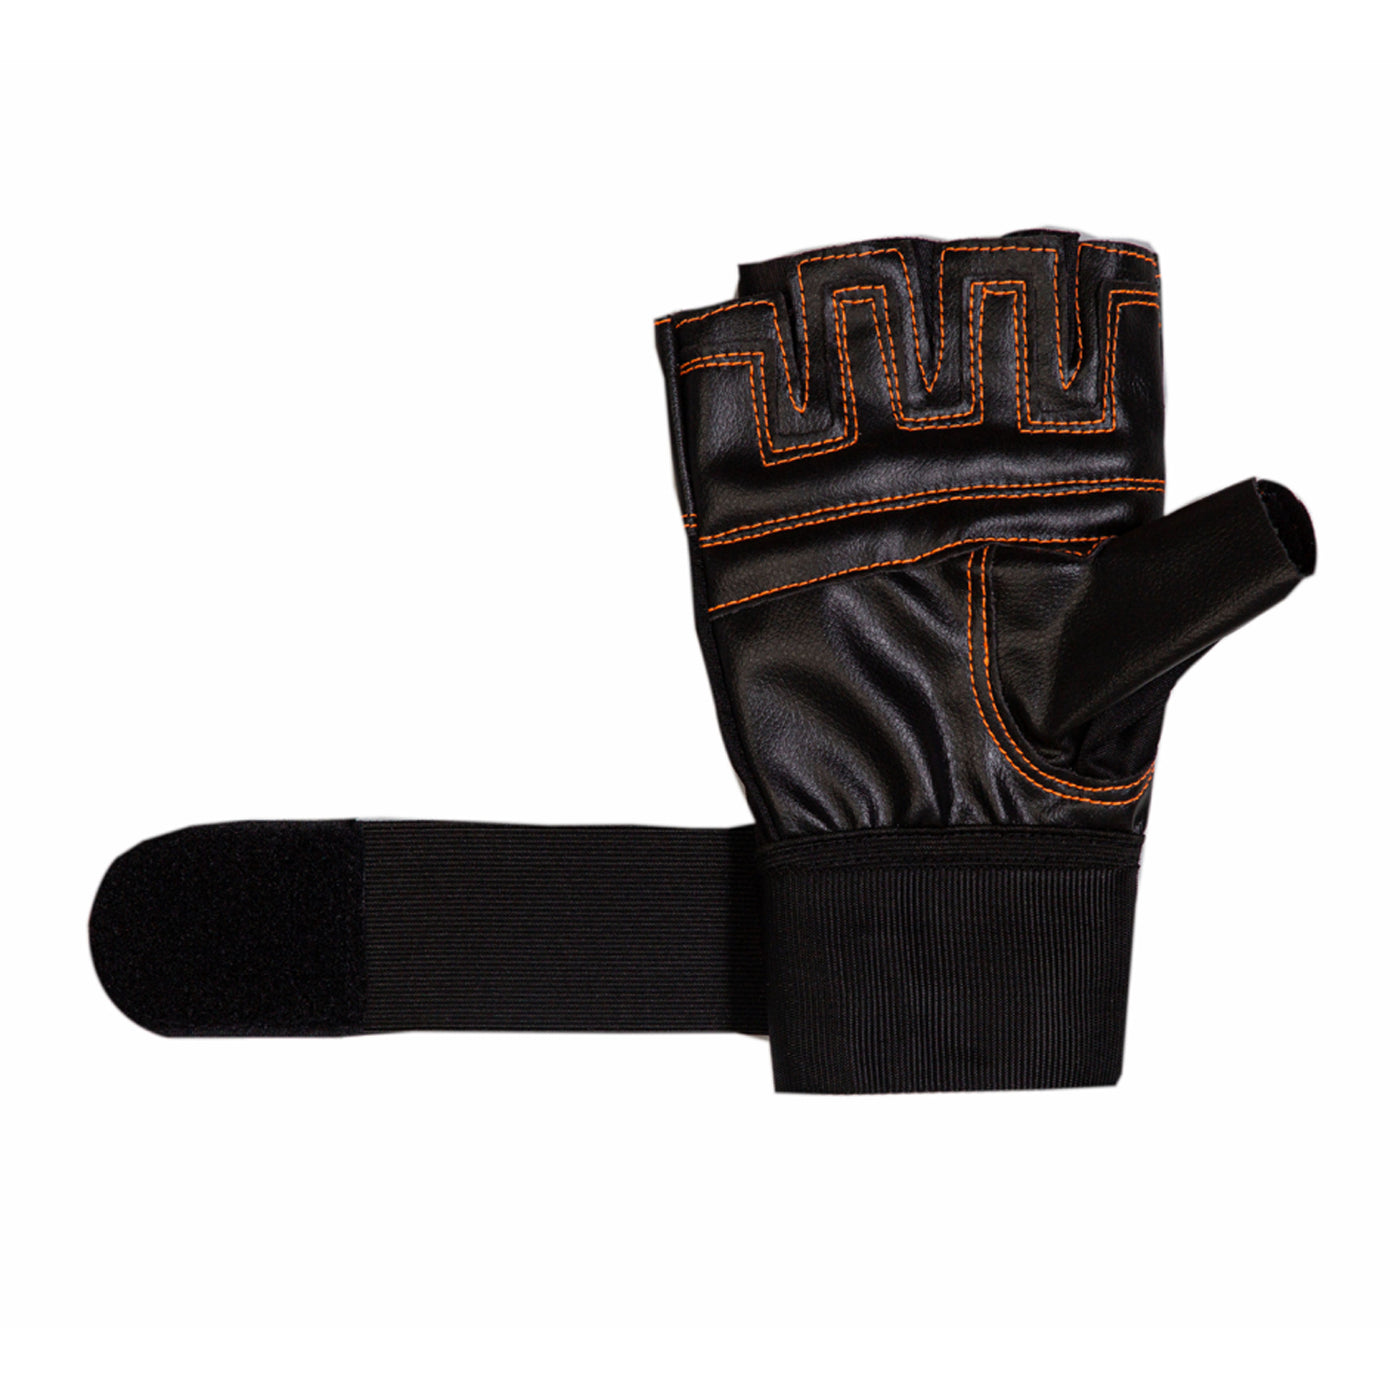 Tenstar Tenstar FitPro Gym and Training Gloves for Men - Black freeshipping - athletive Gym Gloves - Men athletive